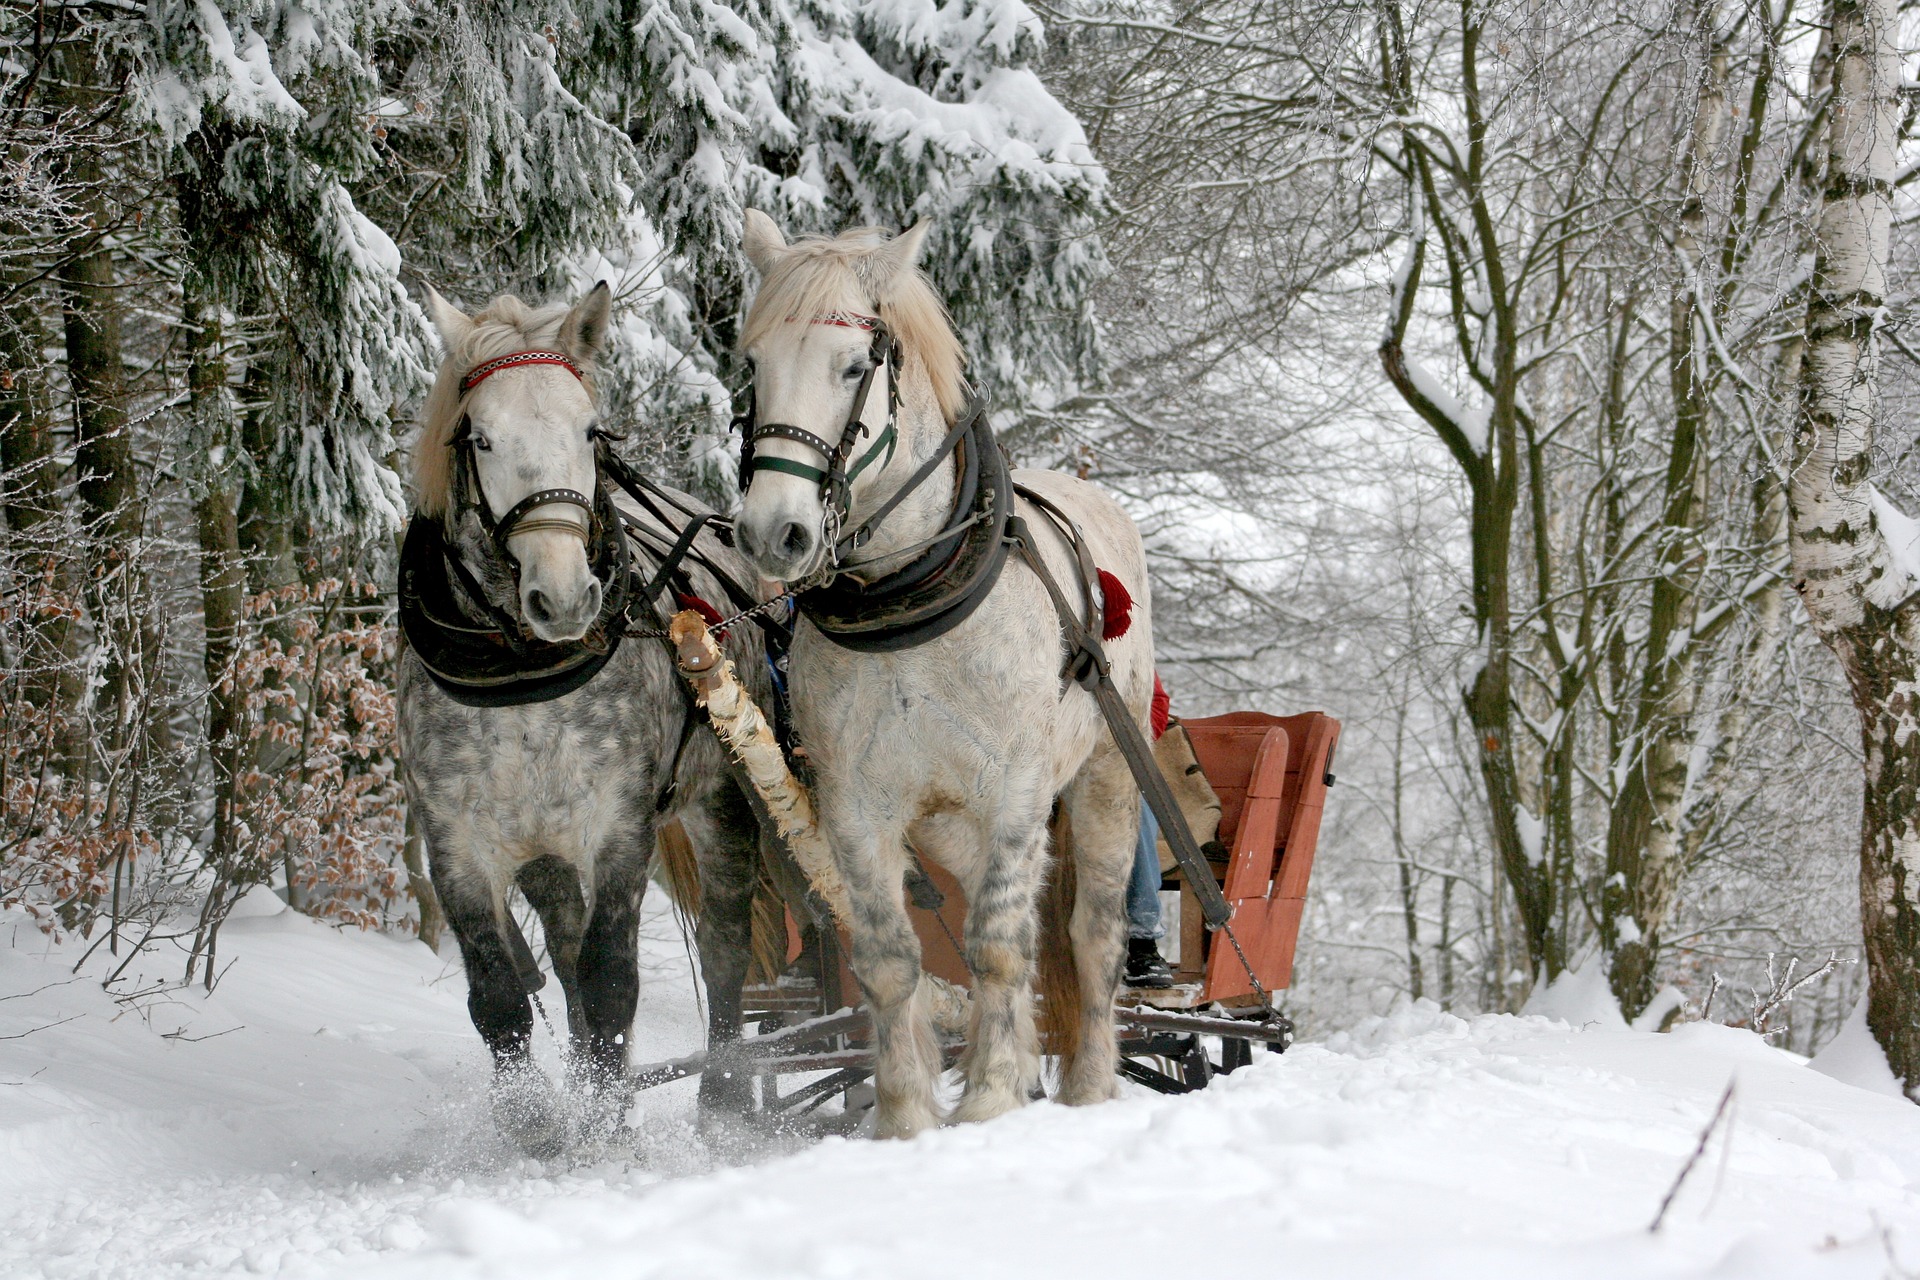 horses pulling a sleigh through snow